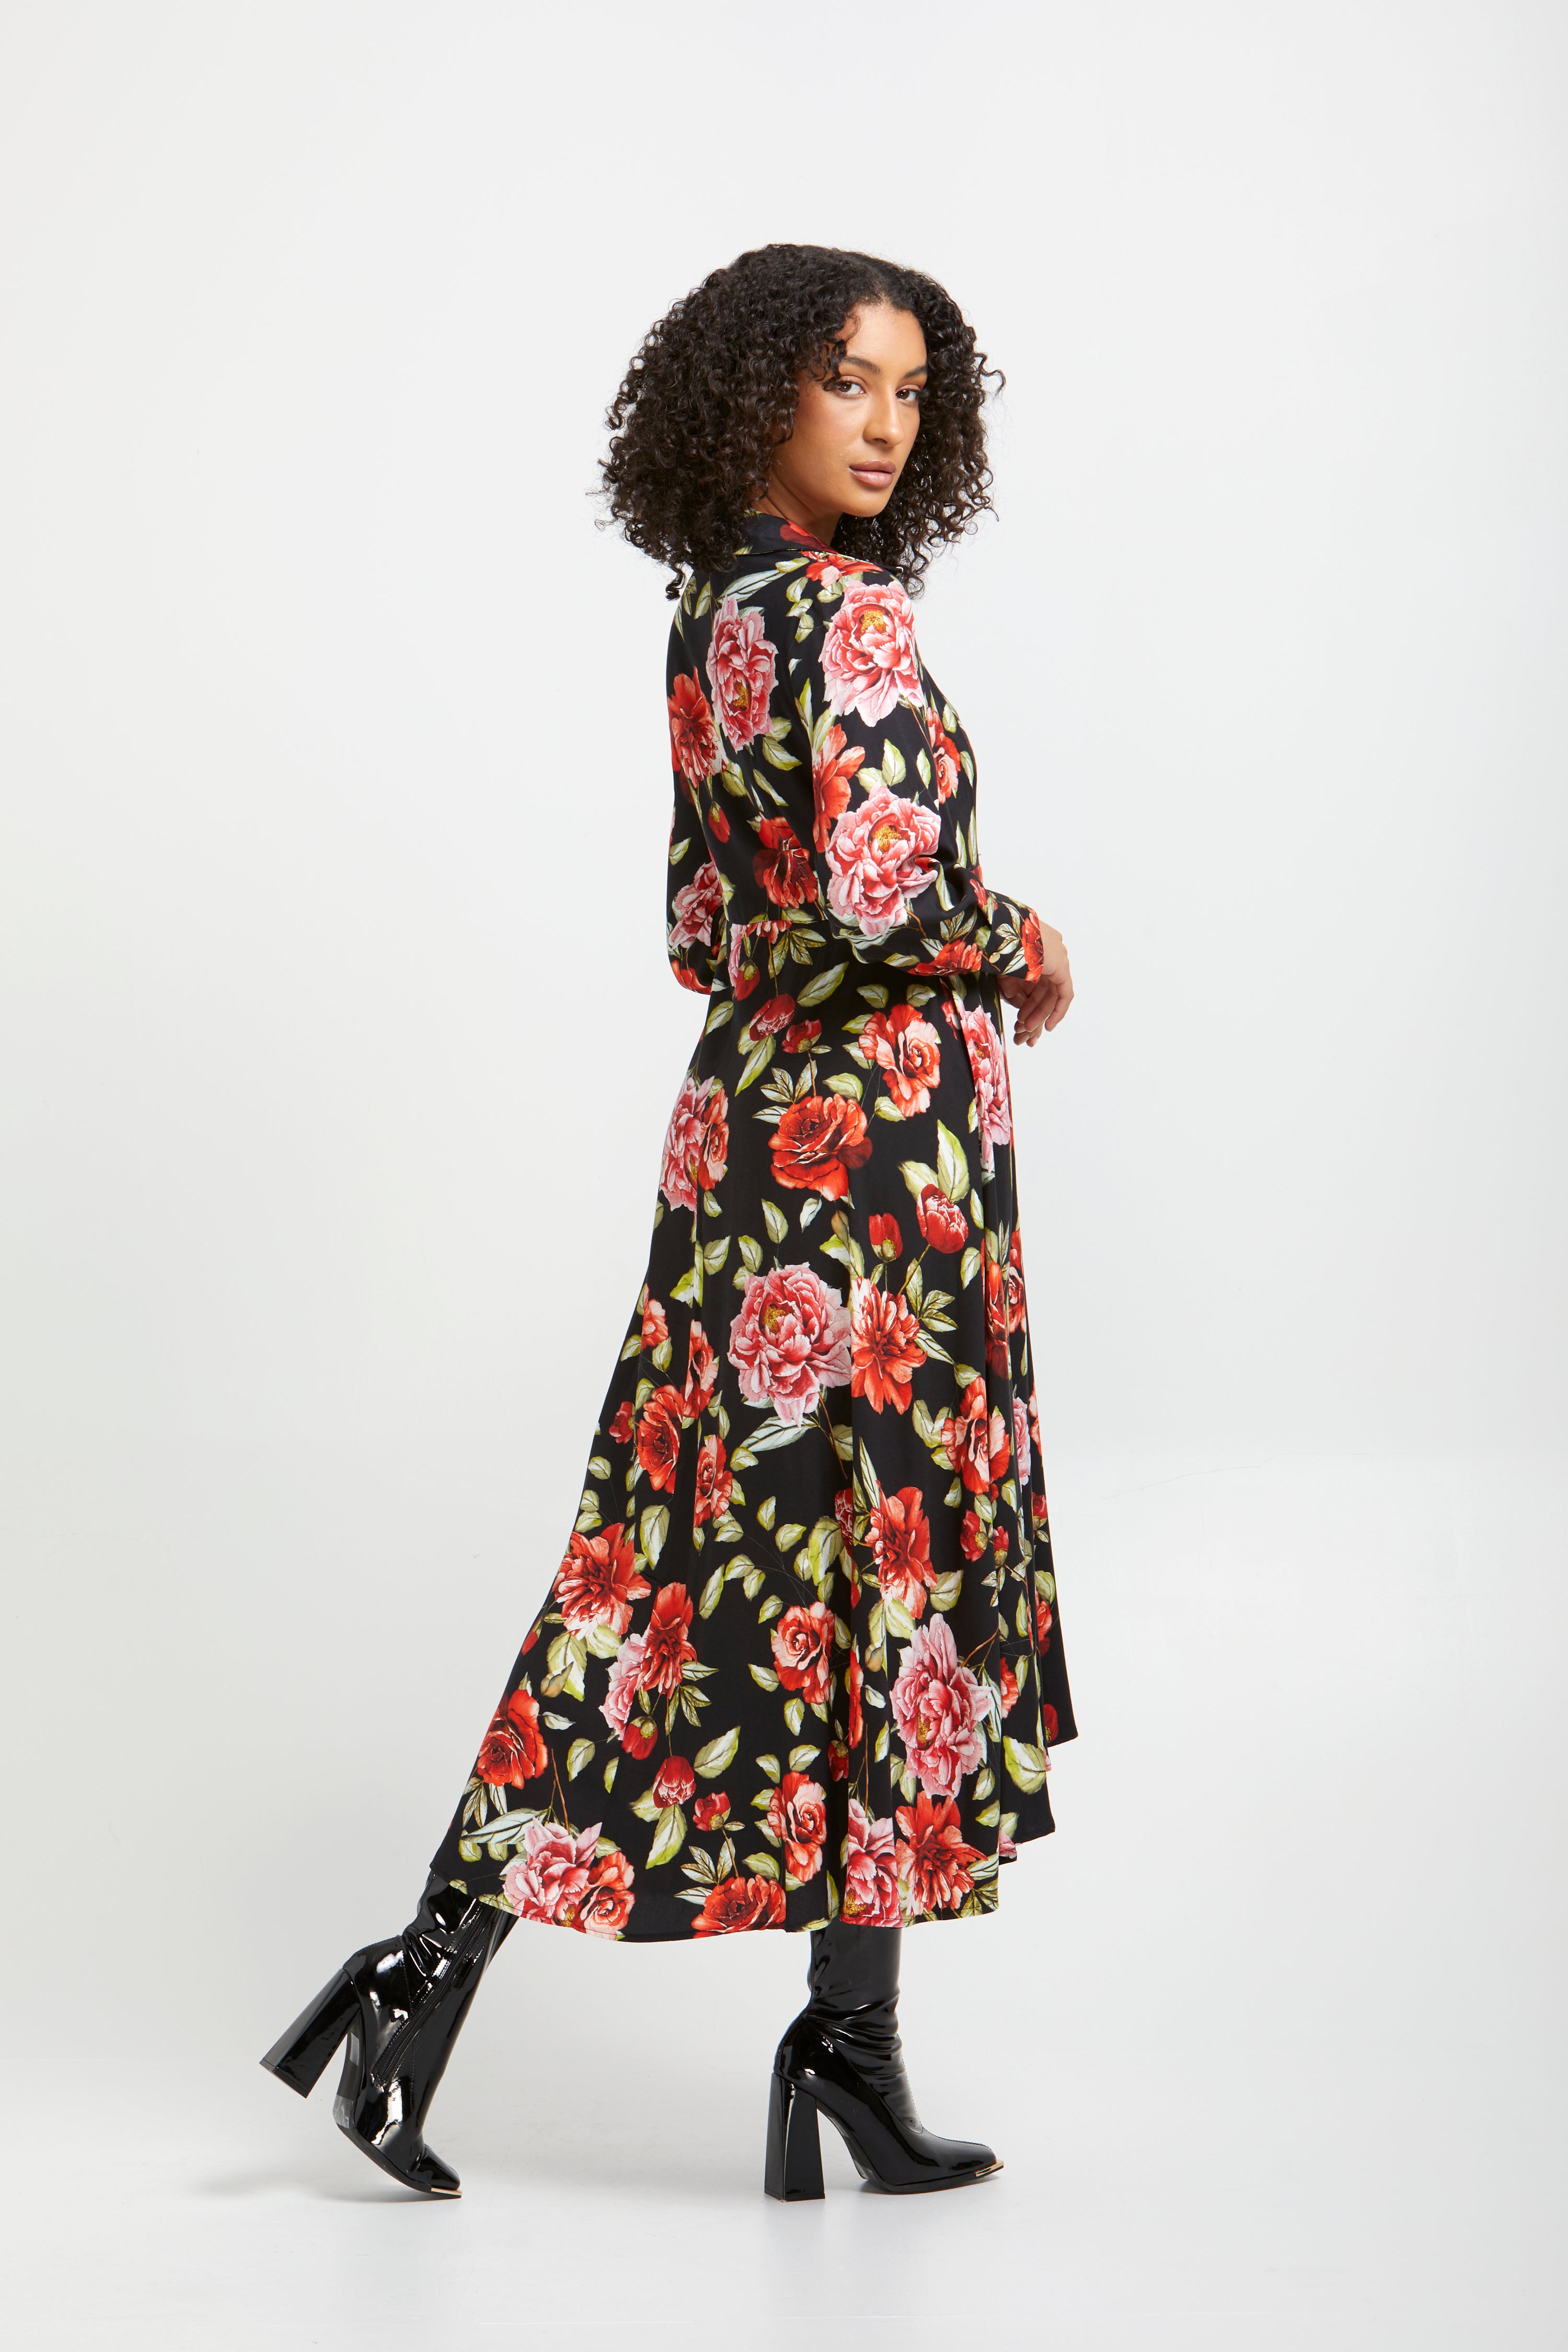 AnnaCristy Milano Natalia Black Floral Wrap Dress Back 2- Made in Italy